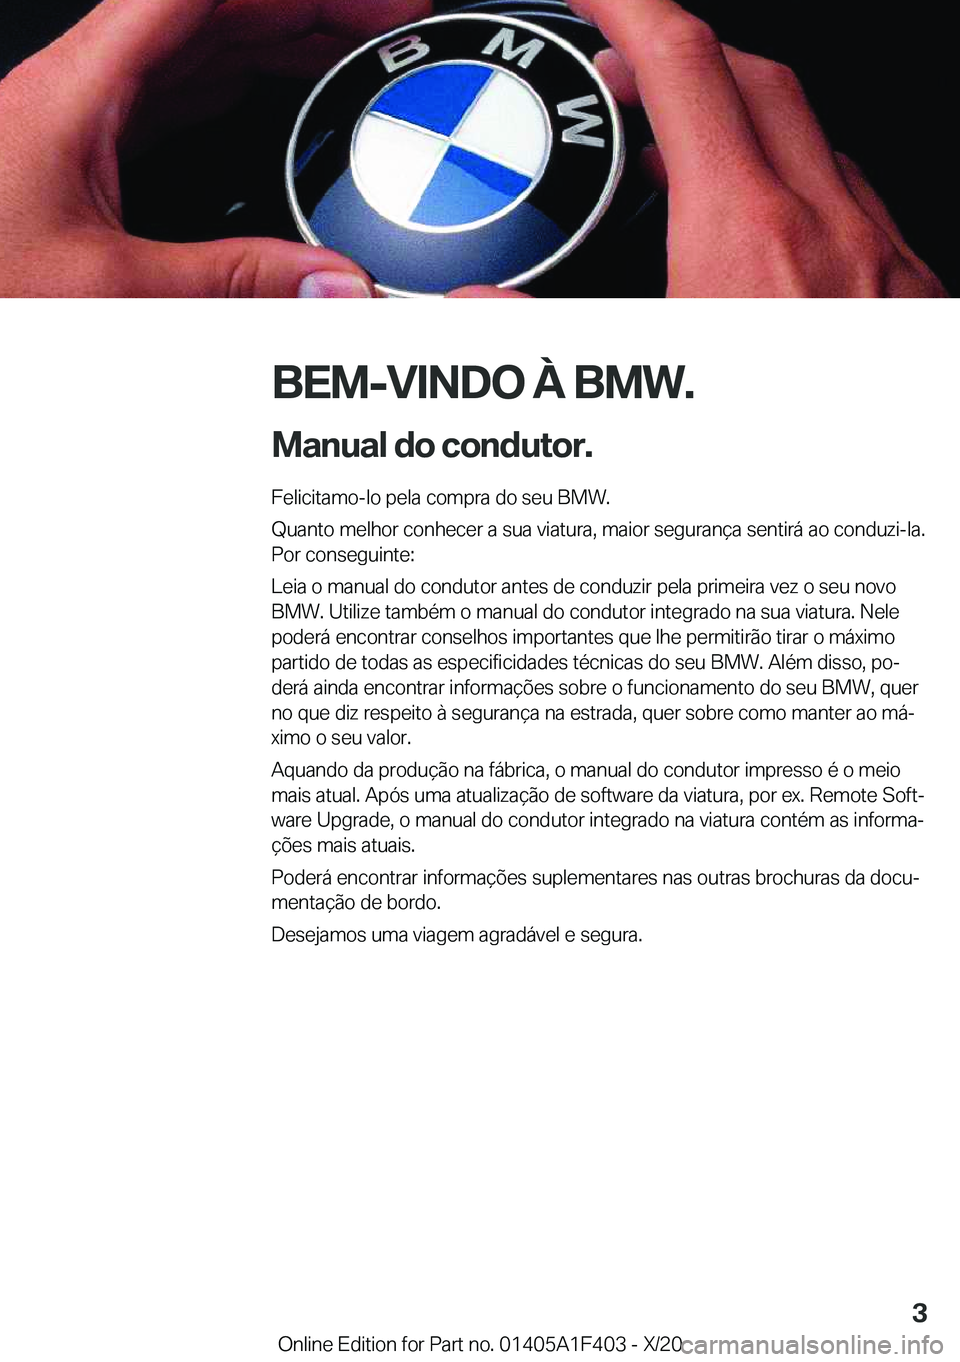 BMW X5 2021  Manual do condutor (in Portuguese) �B�E�M�-�V�I�N�D�O��À��B�M�W�.
�M�a�n�u�a�l��d�o��c�o�n�d�u�t�o�r�. �F�e�l�i�c�i�t�a�m�o�-�l�o��p�e�l�a��c�o�m�p�r�a��d�o��s�e�u��B�M�W�.
�Q�u�a�n�t�o��m�e�l�h�o�r��c�o�n�h�e�c�e�r��a��s